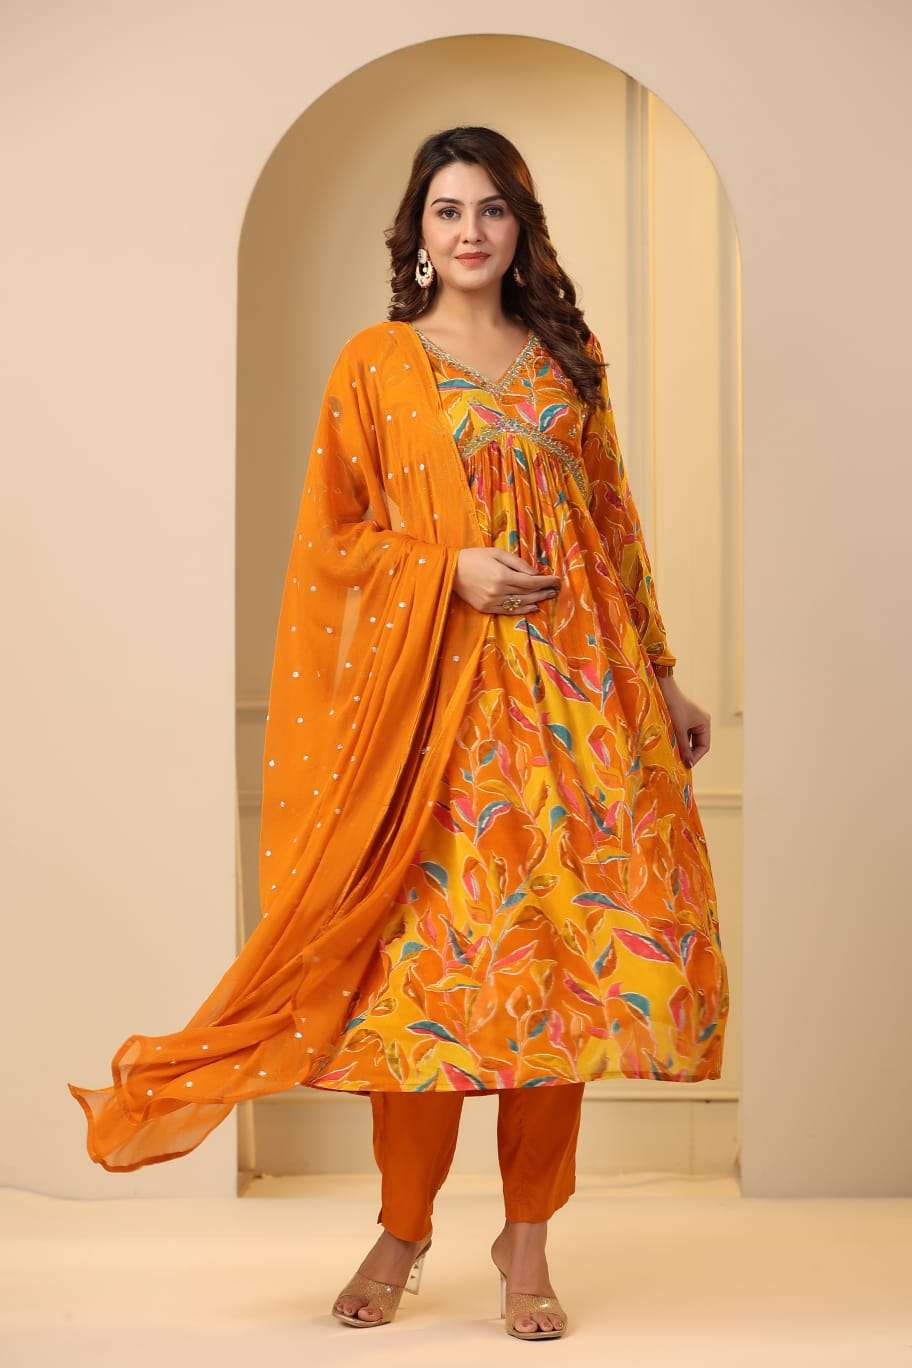 Urban Style Women's Ethnic Wear Printed Flair Kurti (Yellow & Black, XXL) -  USWAK06 Price - Buy Online at Best Price in India